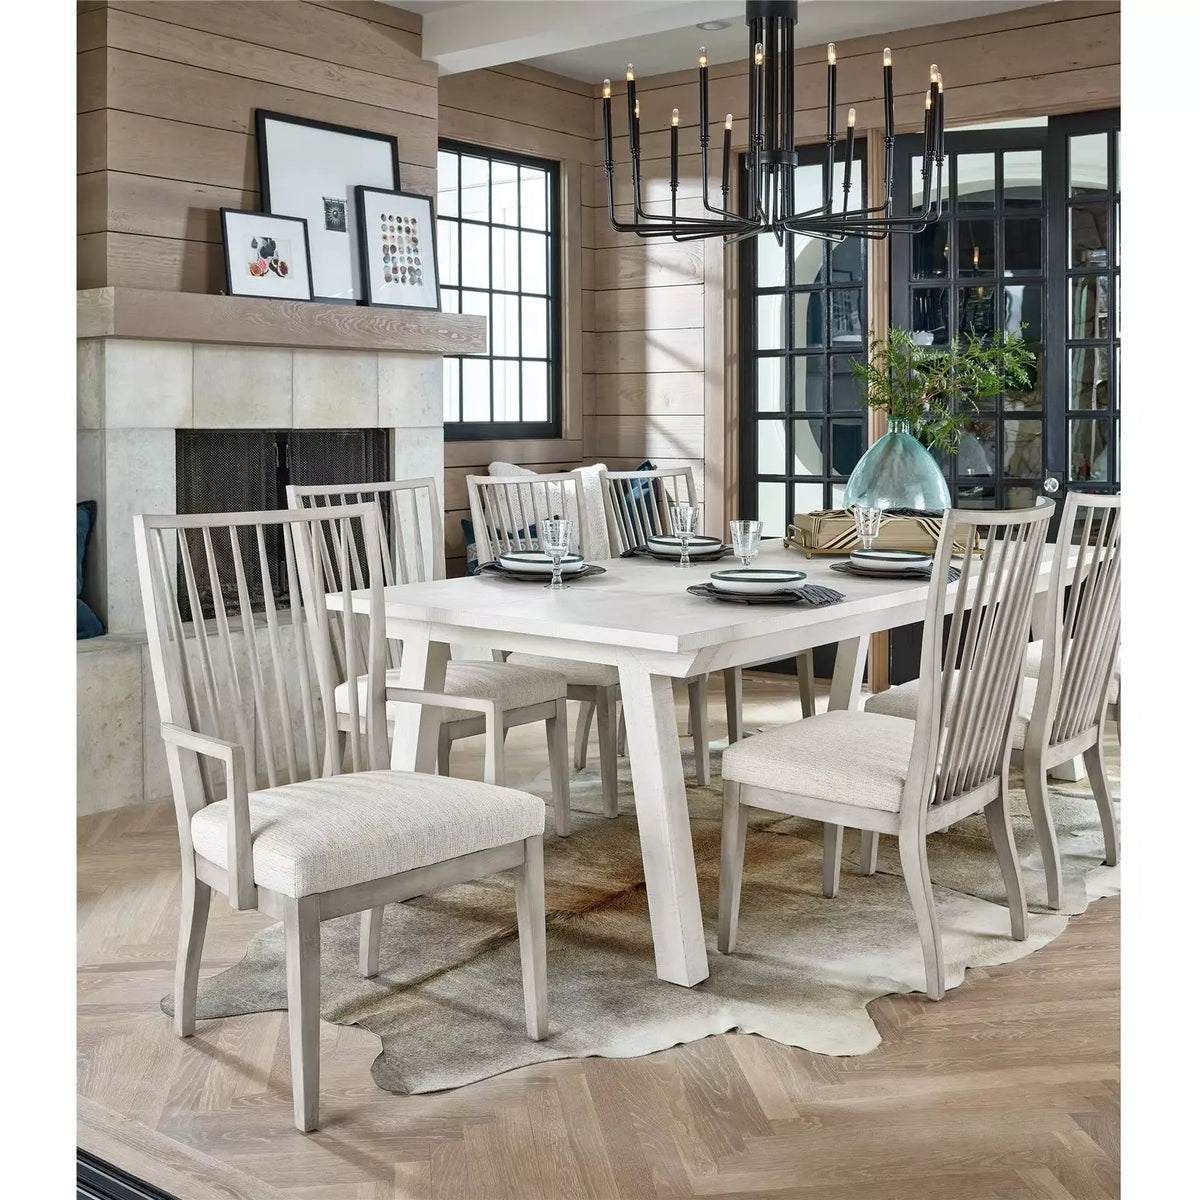 Bowen Arm Chair - Be Bold Furniture